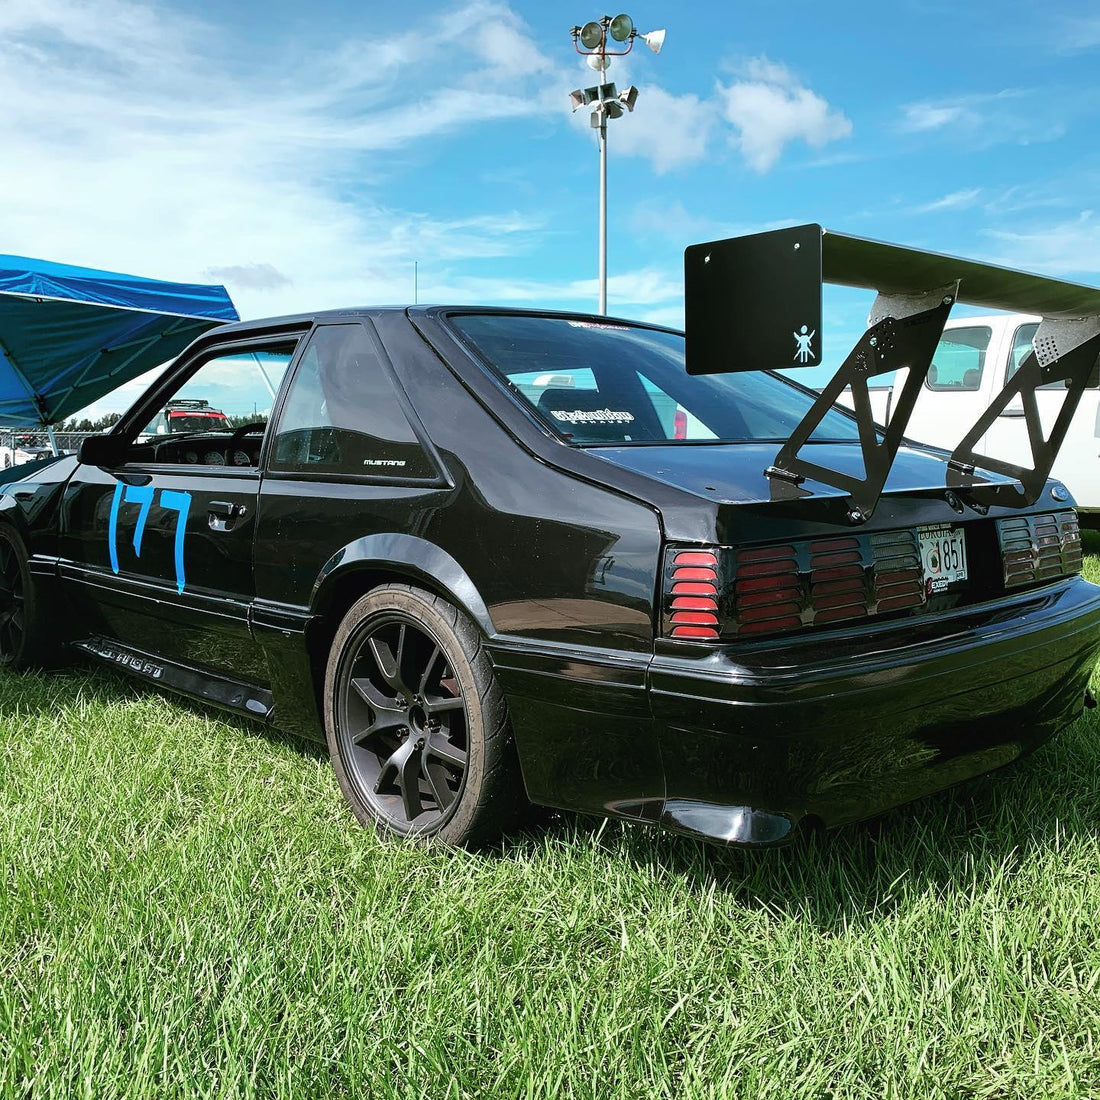 Mustang Big Wang Kit '79-‘93 Fox body - Nine Lives Racing